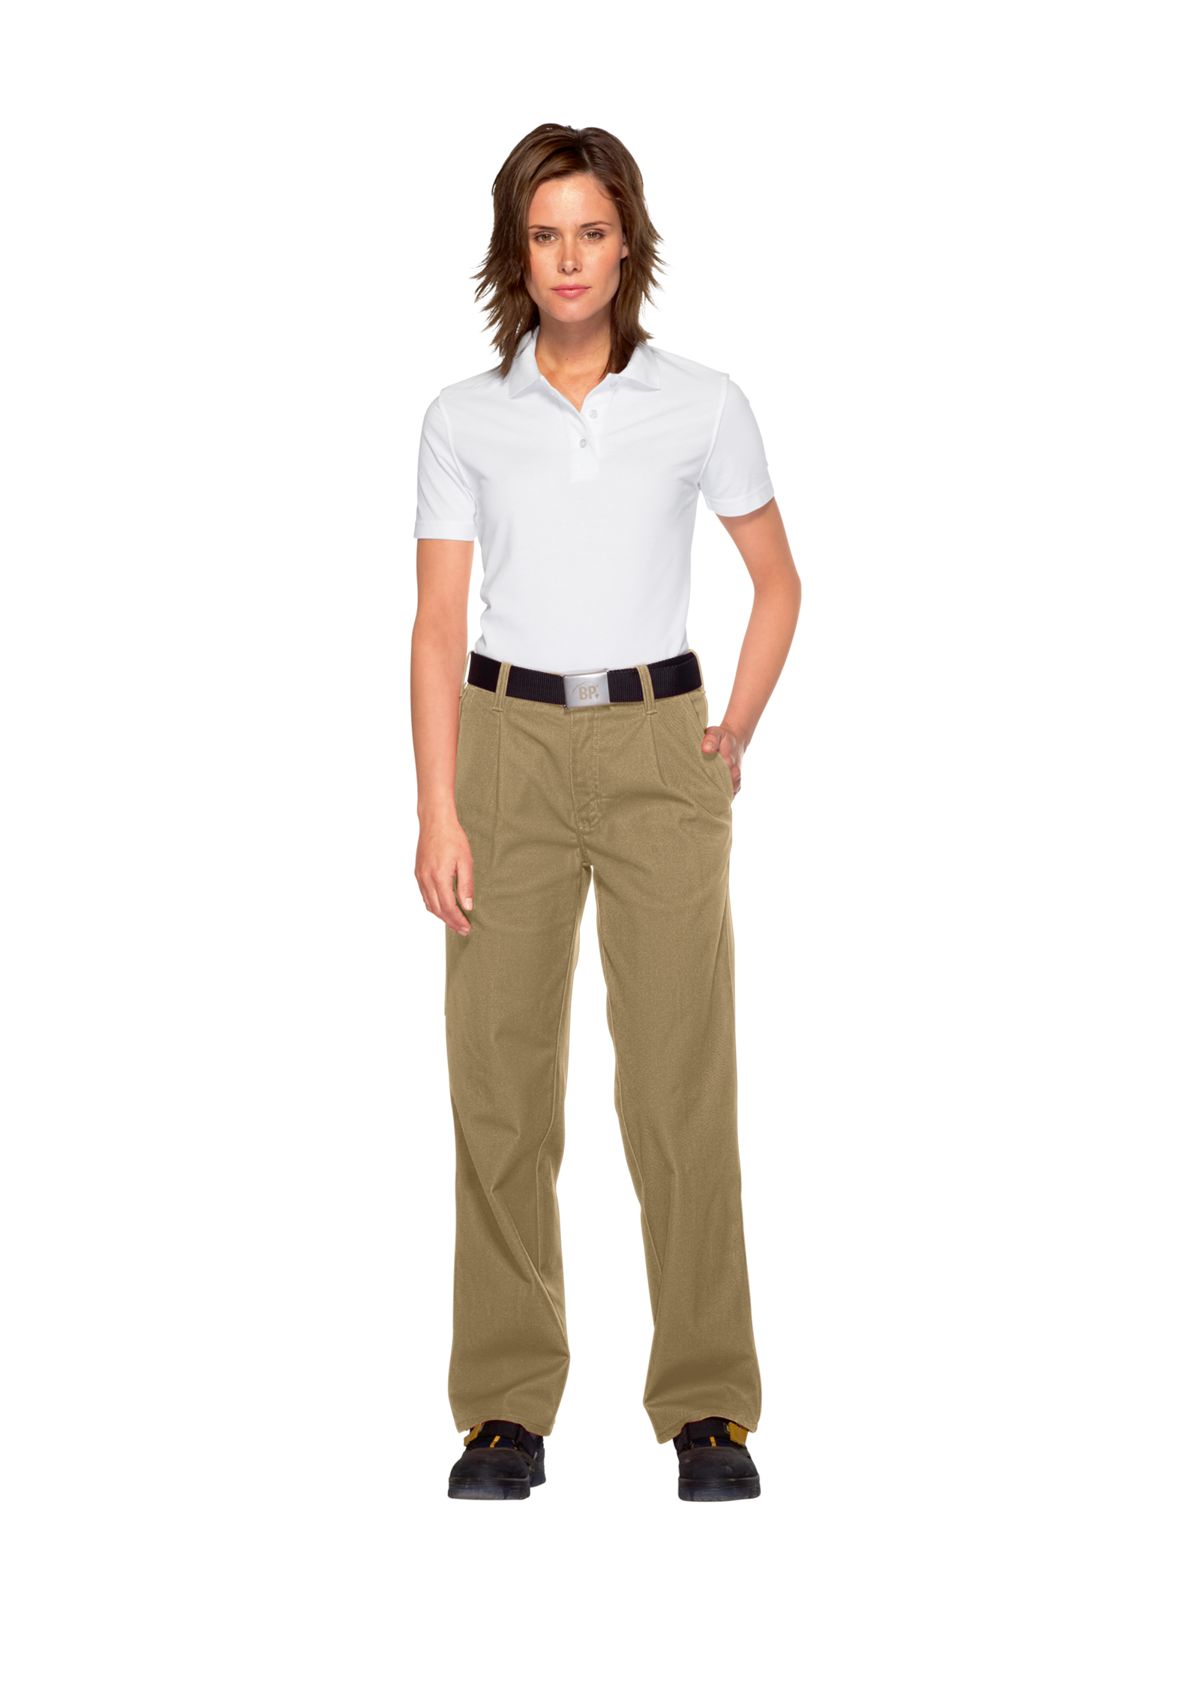 BP® Comfort work trousers